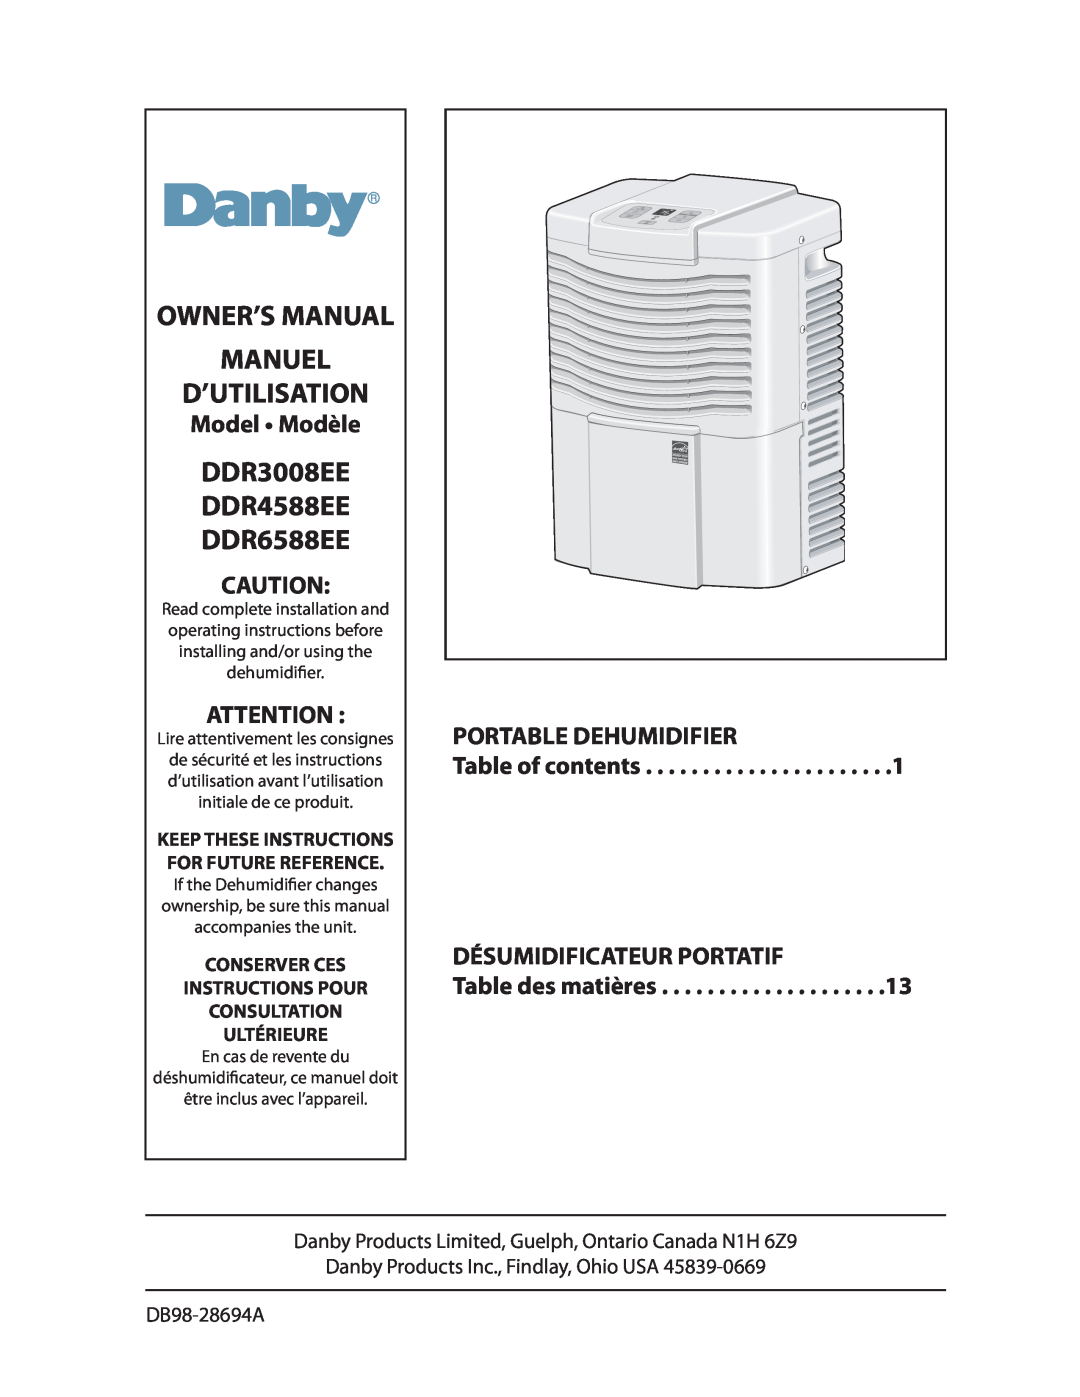 Danby DDR3008EE manual BOCZ1SPEVDUT*ODJOEMBZ0IJP64, #, 3&& %%3&& %%3, 6-5²3*&63 